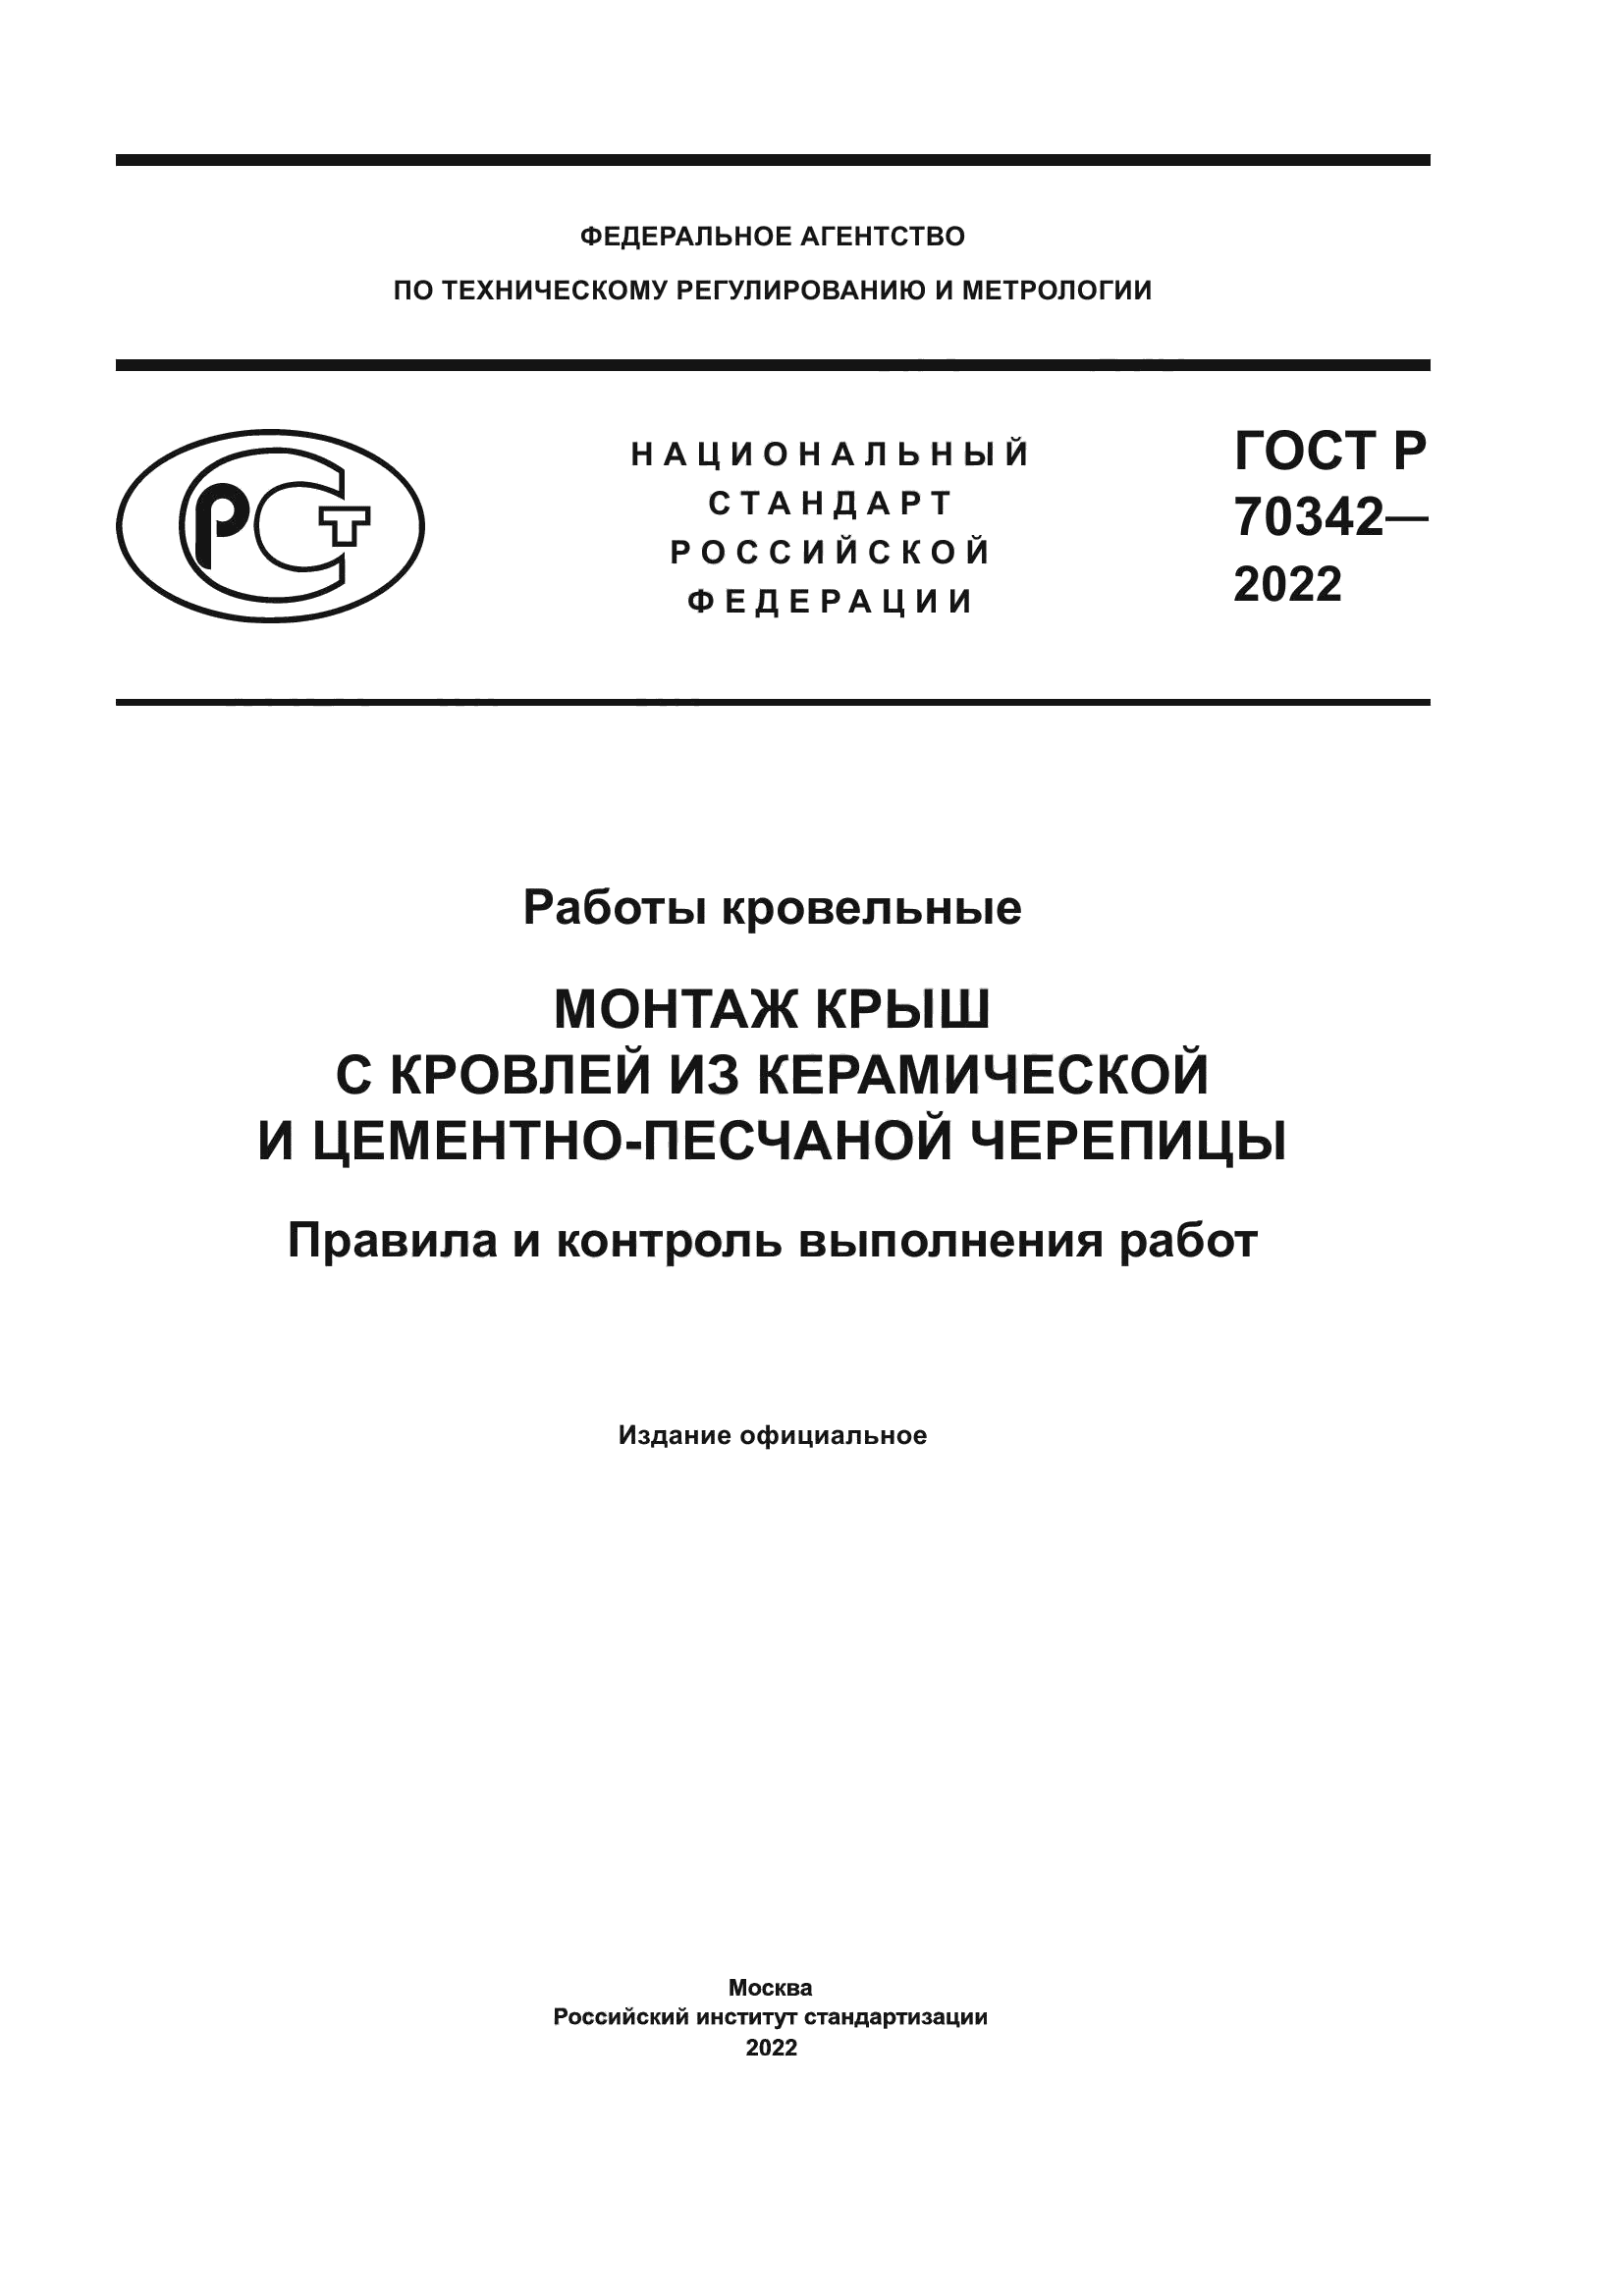 ГОСТ Р 70342-2022